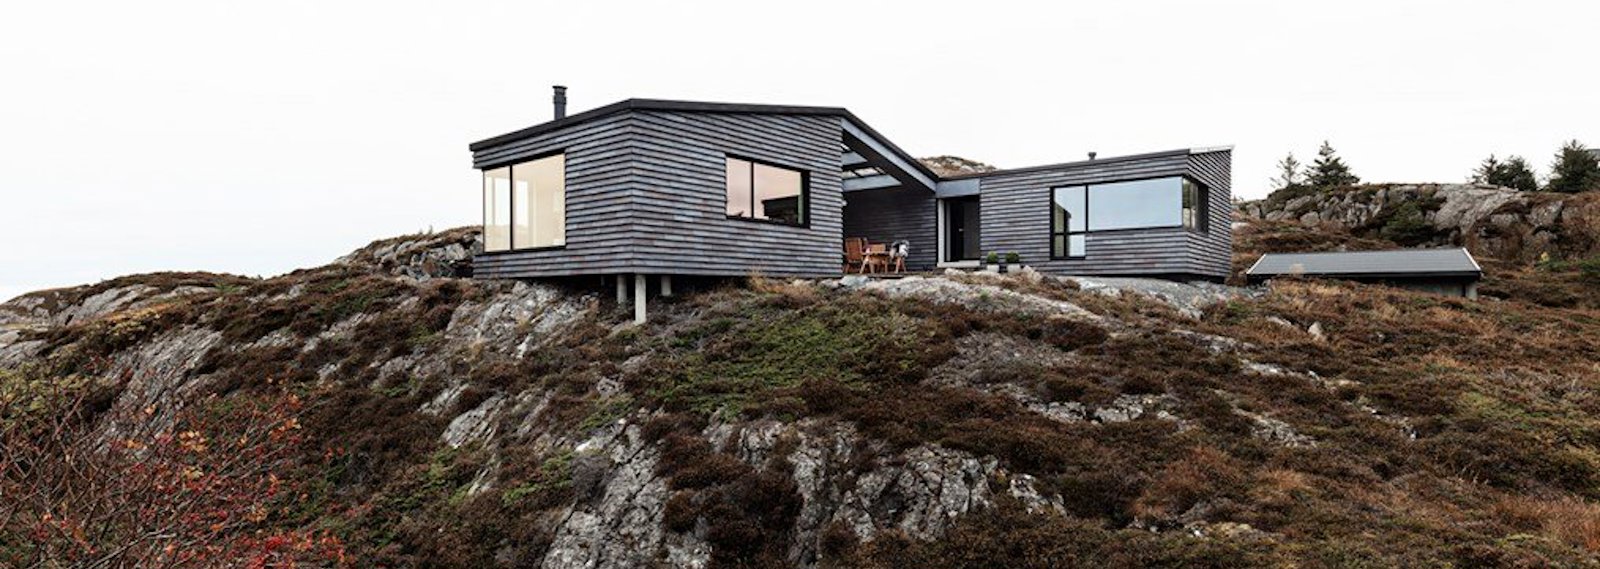 cabin on sandøya, norway